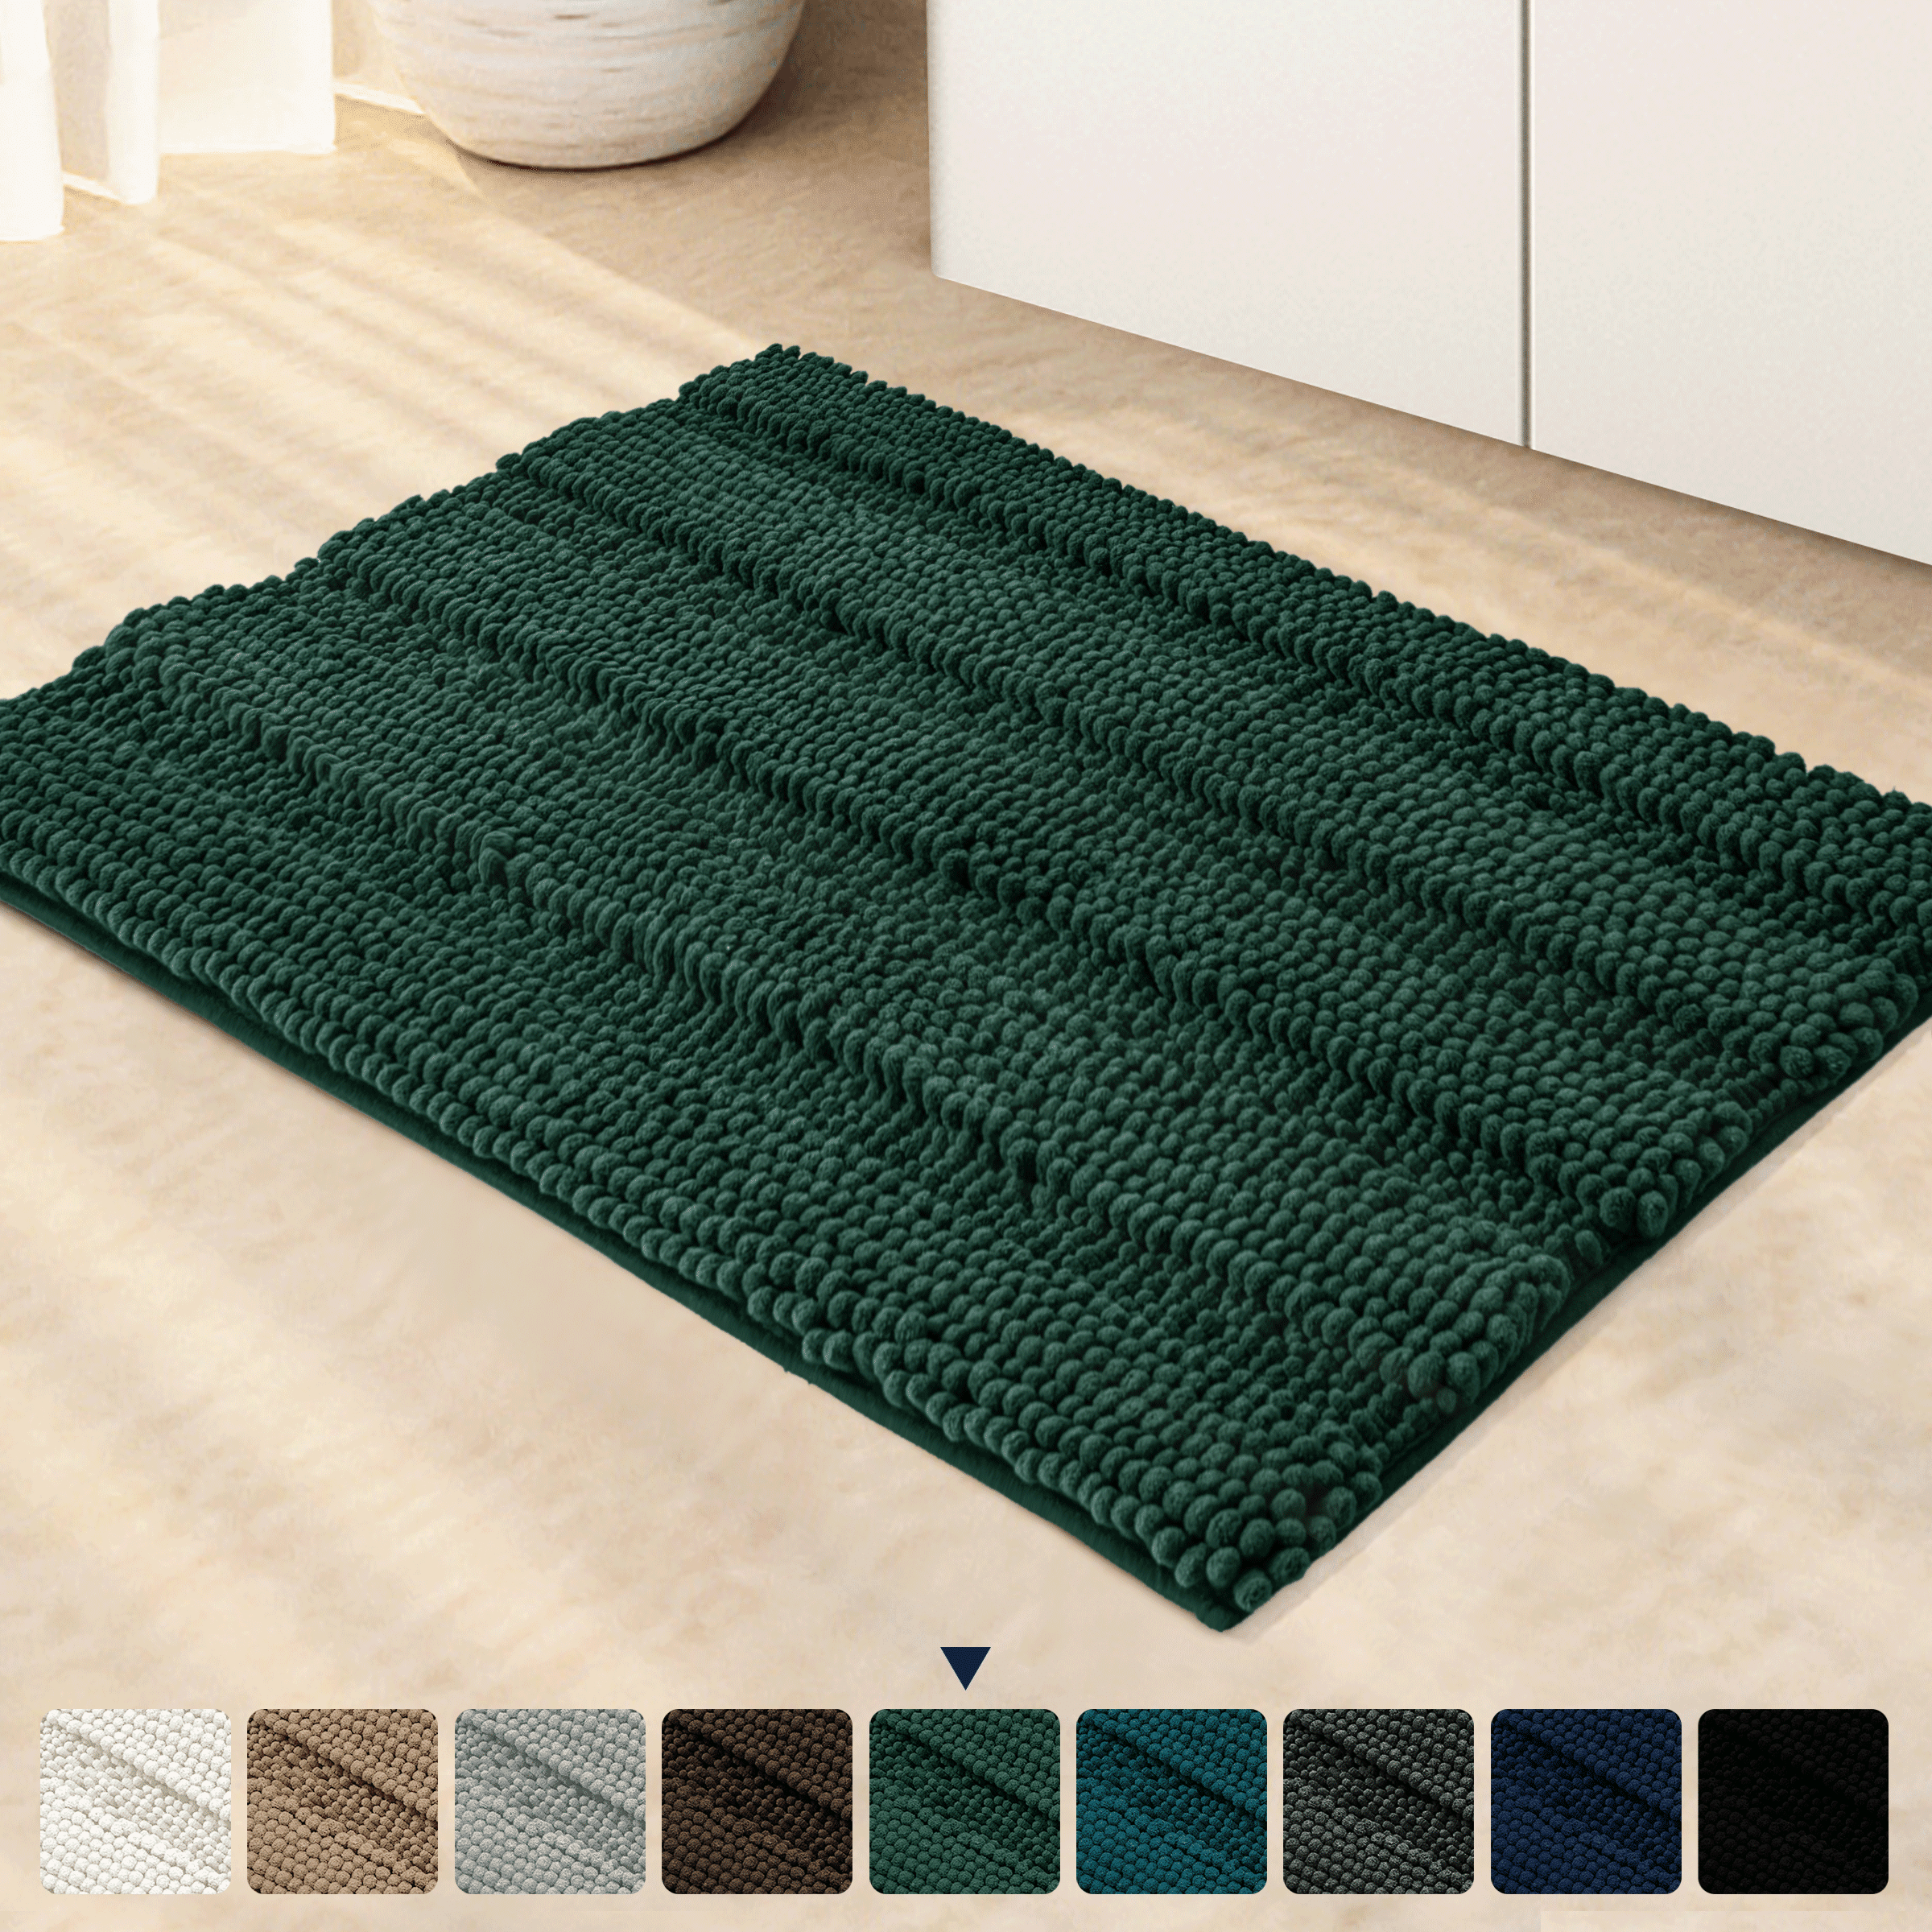 24x16" Seaside Ocean Holiday Non-Slip Bathroom Decor Carpet Bath Mat Rug Carpet 